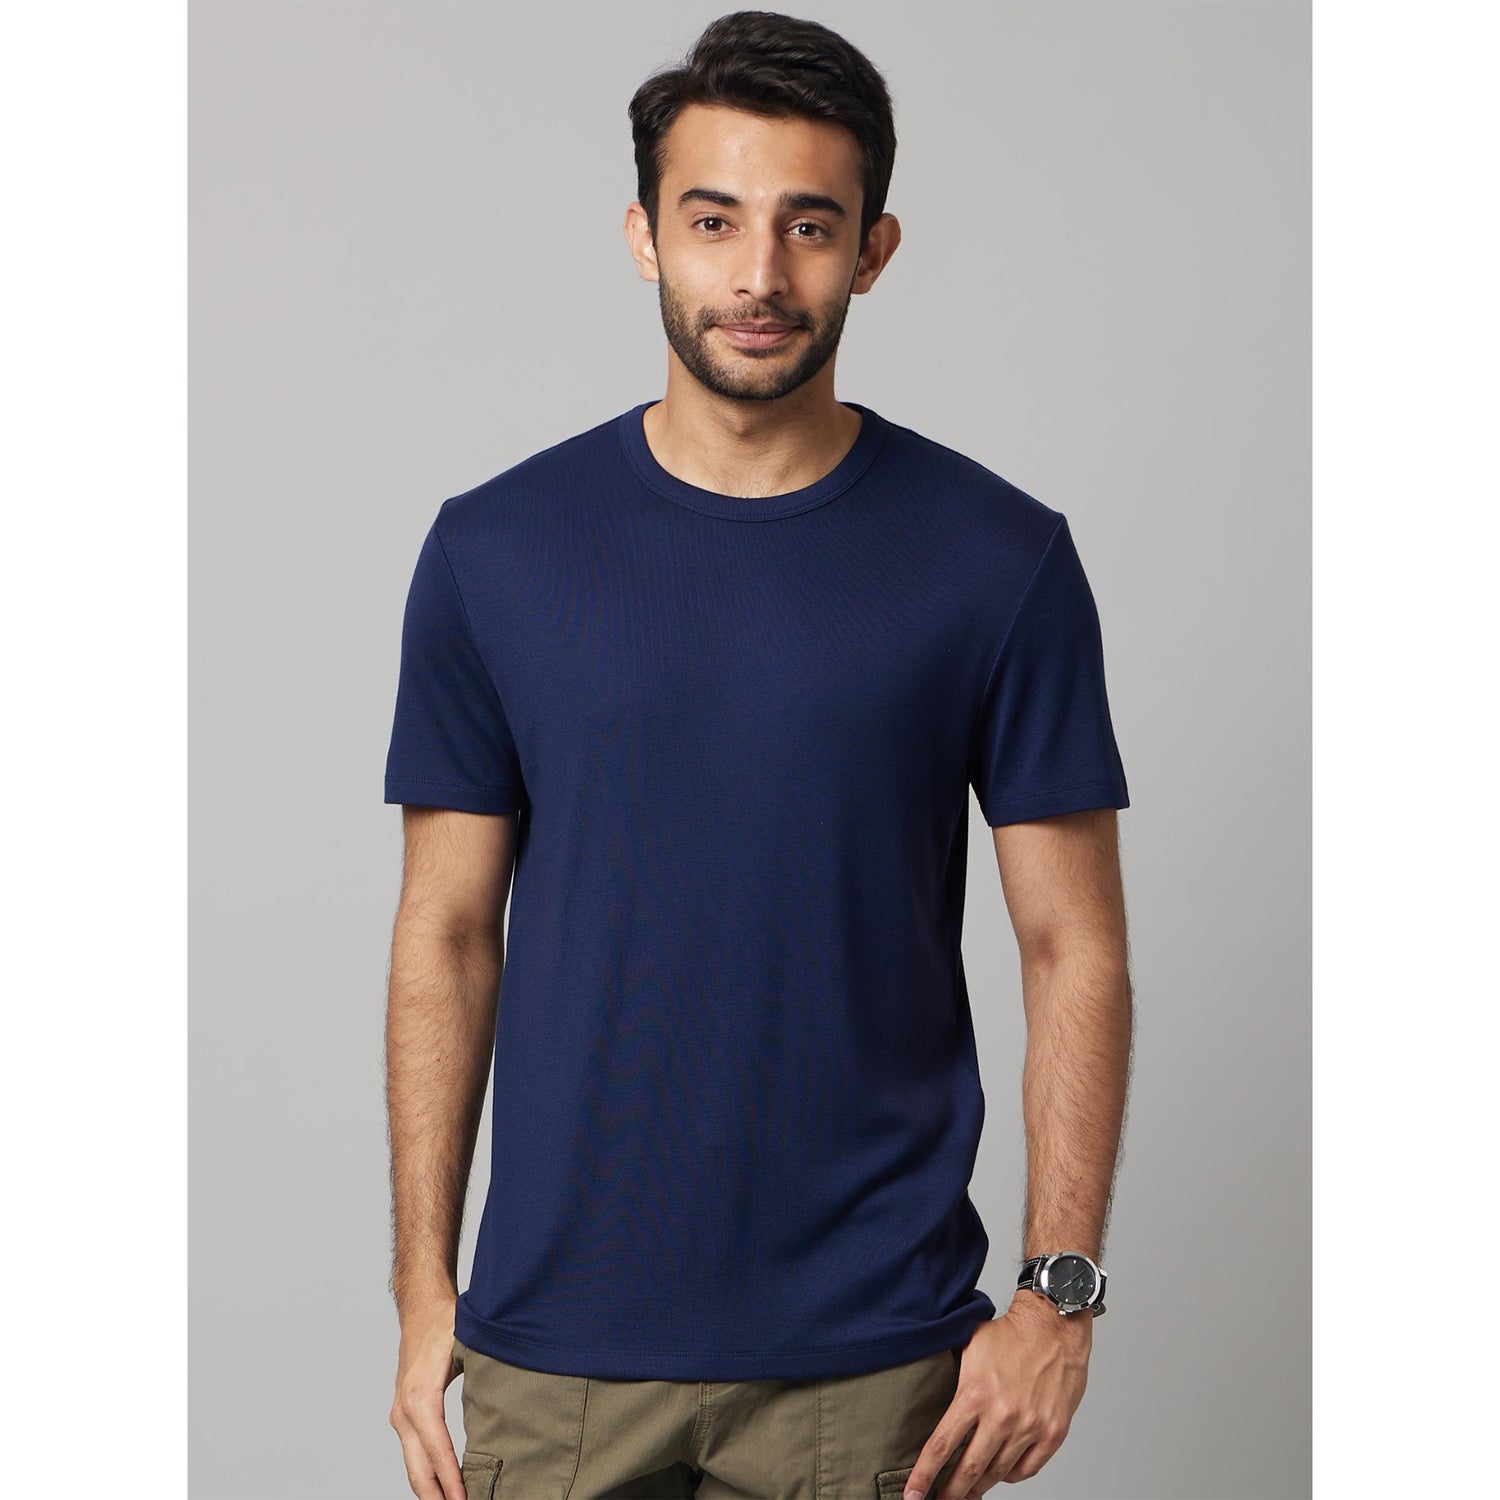 Navy Blue Solid Short Sleeves Round Neck Tshirt (DEMARLIN)